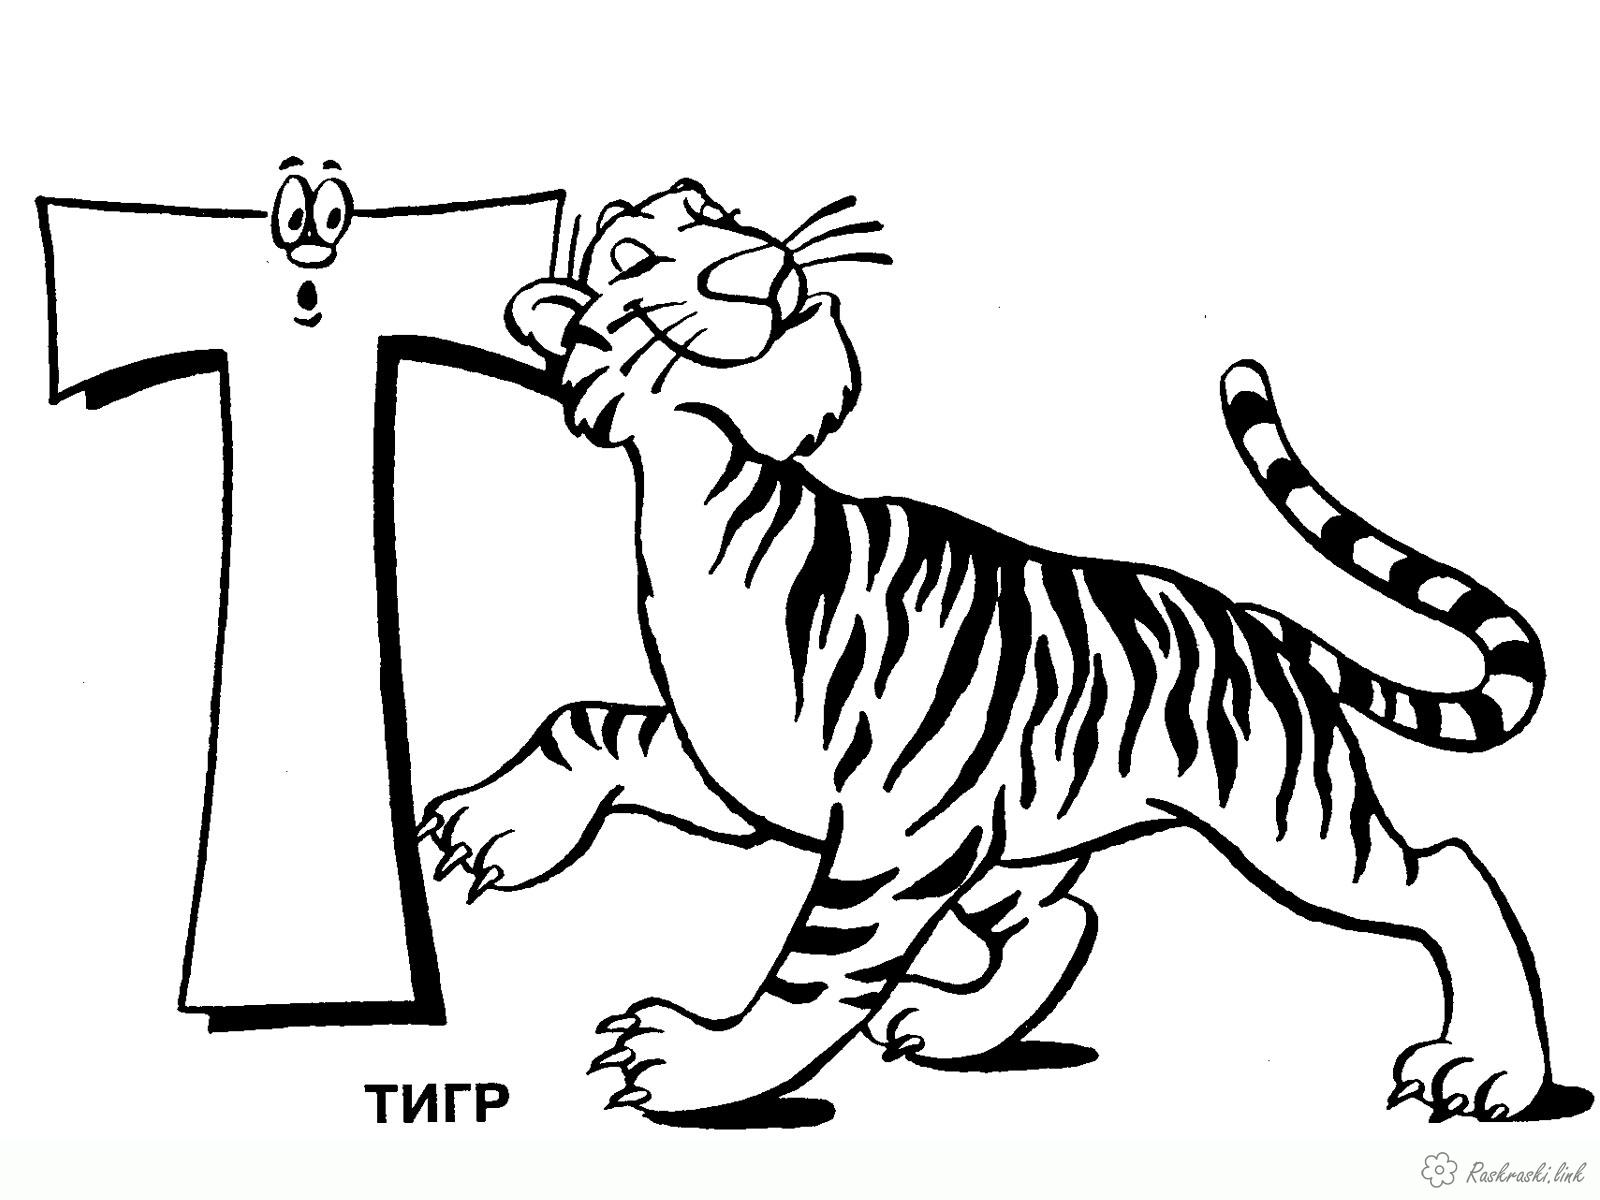 Розмальовки алфавіт Букви алфавіту в розмальовках. Буква Т тигр